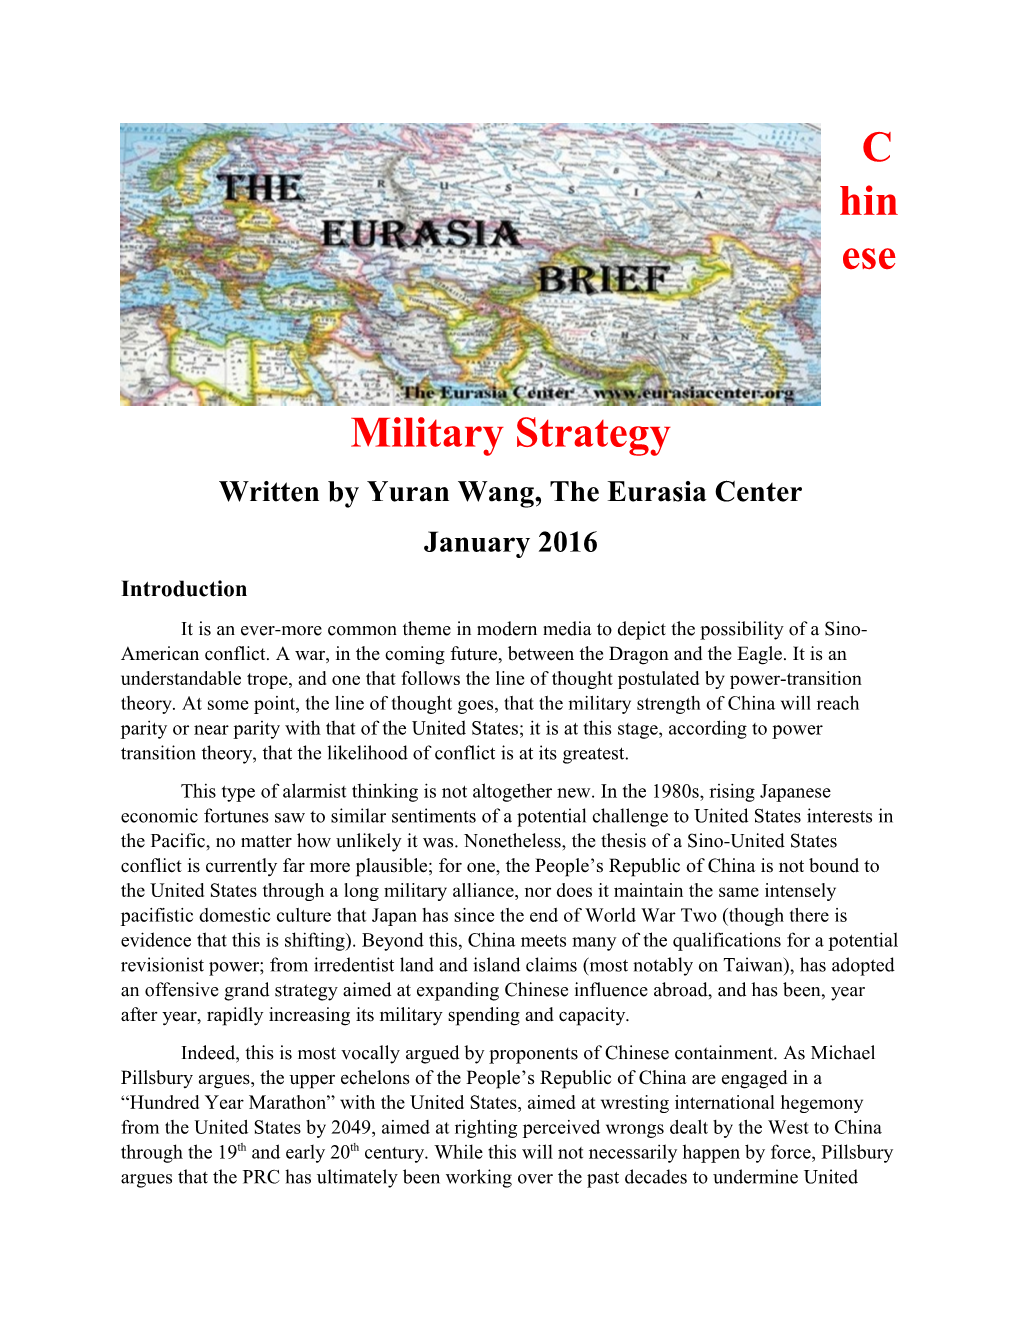 Written by Yuran Wan G, the Eurasia Center